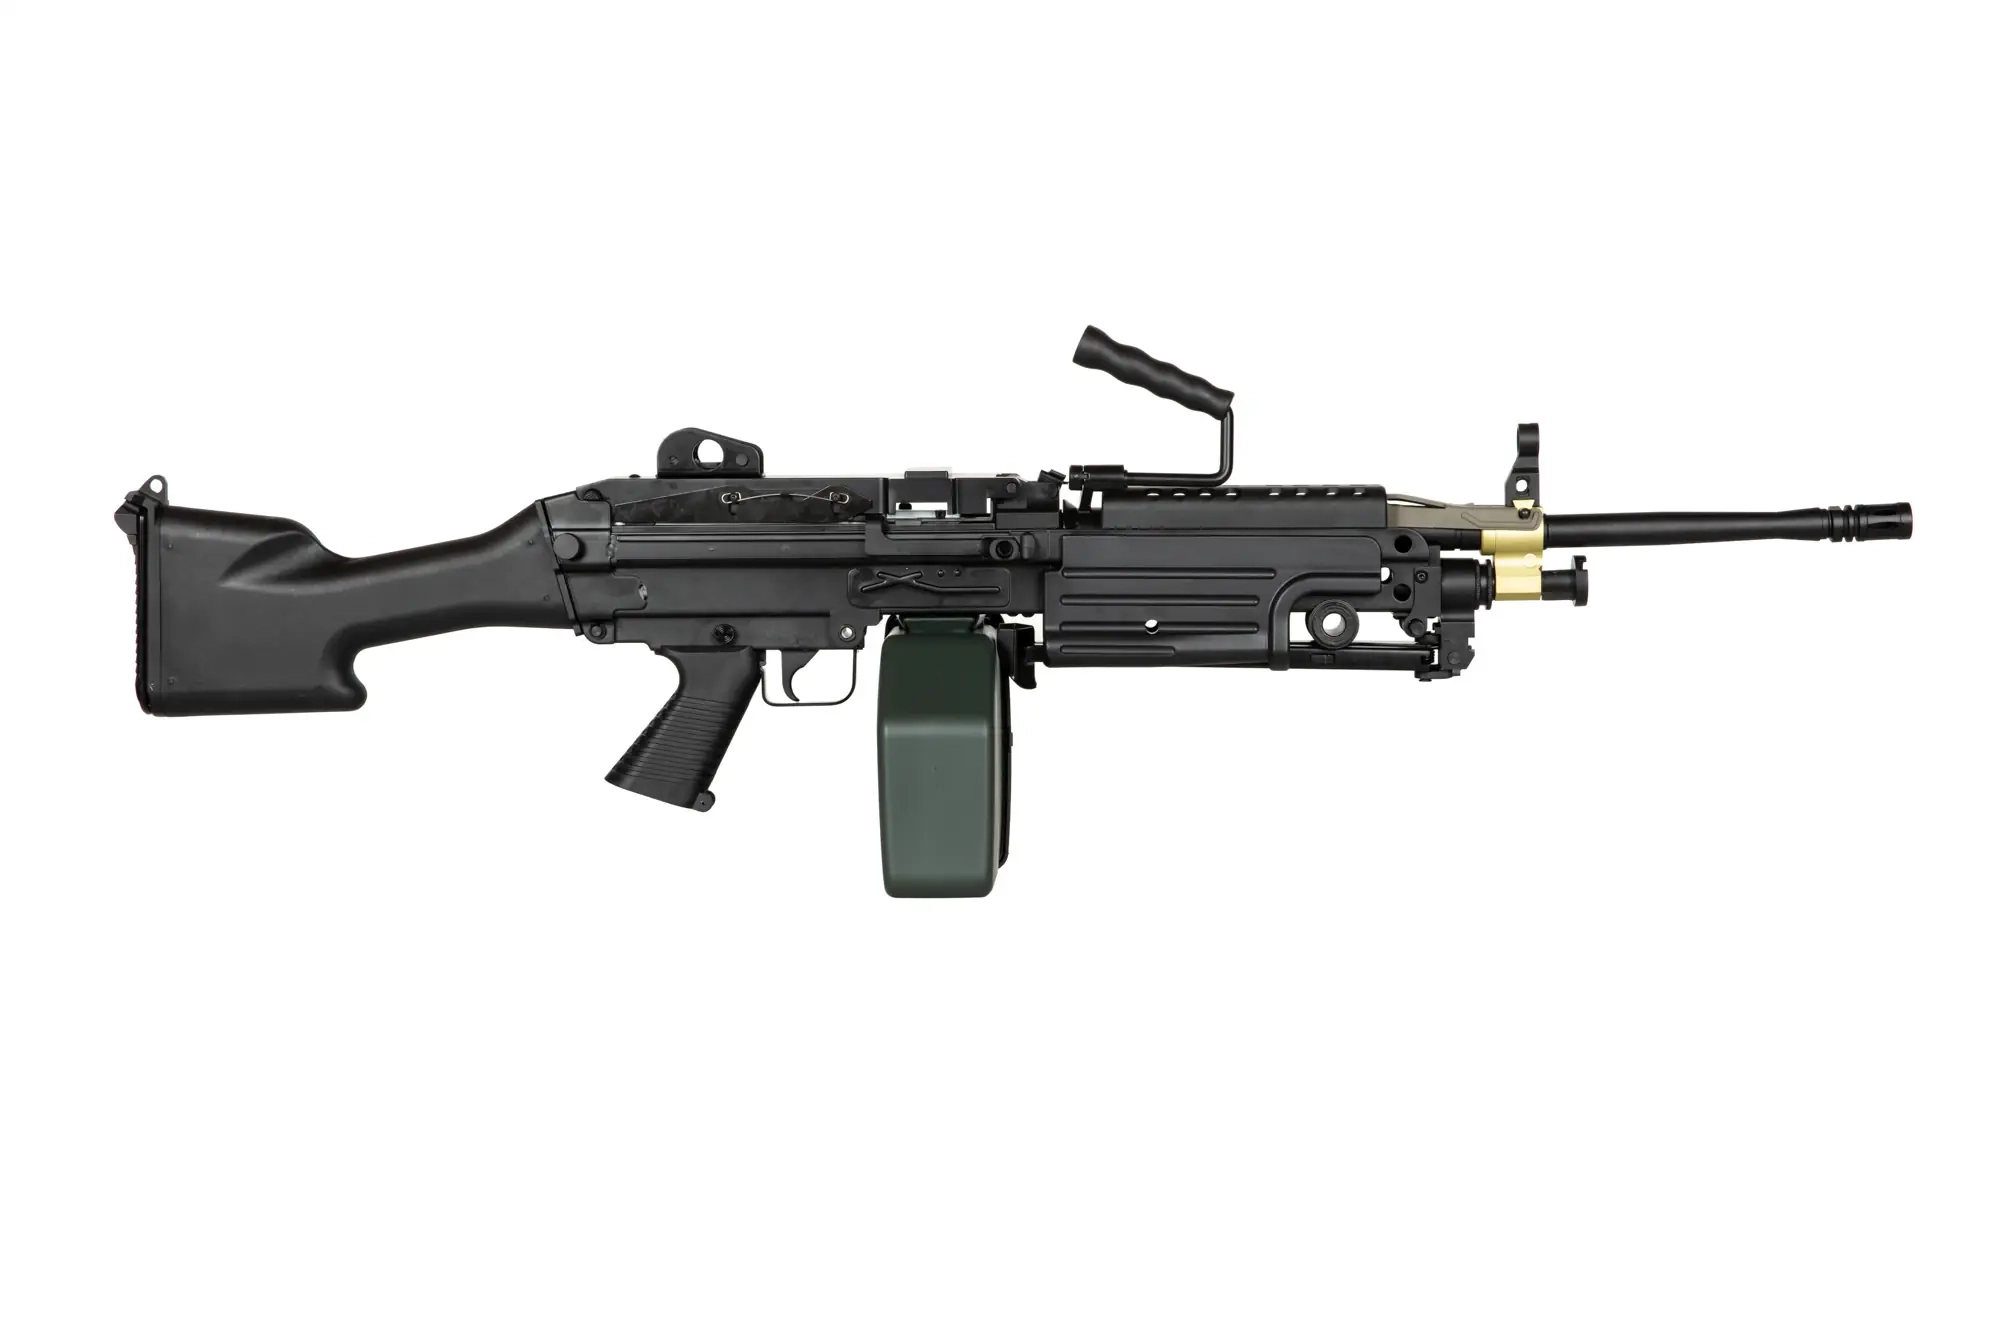 Specna Arms SA-249 MK2 EDGE AEG konekivääri - musta